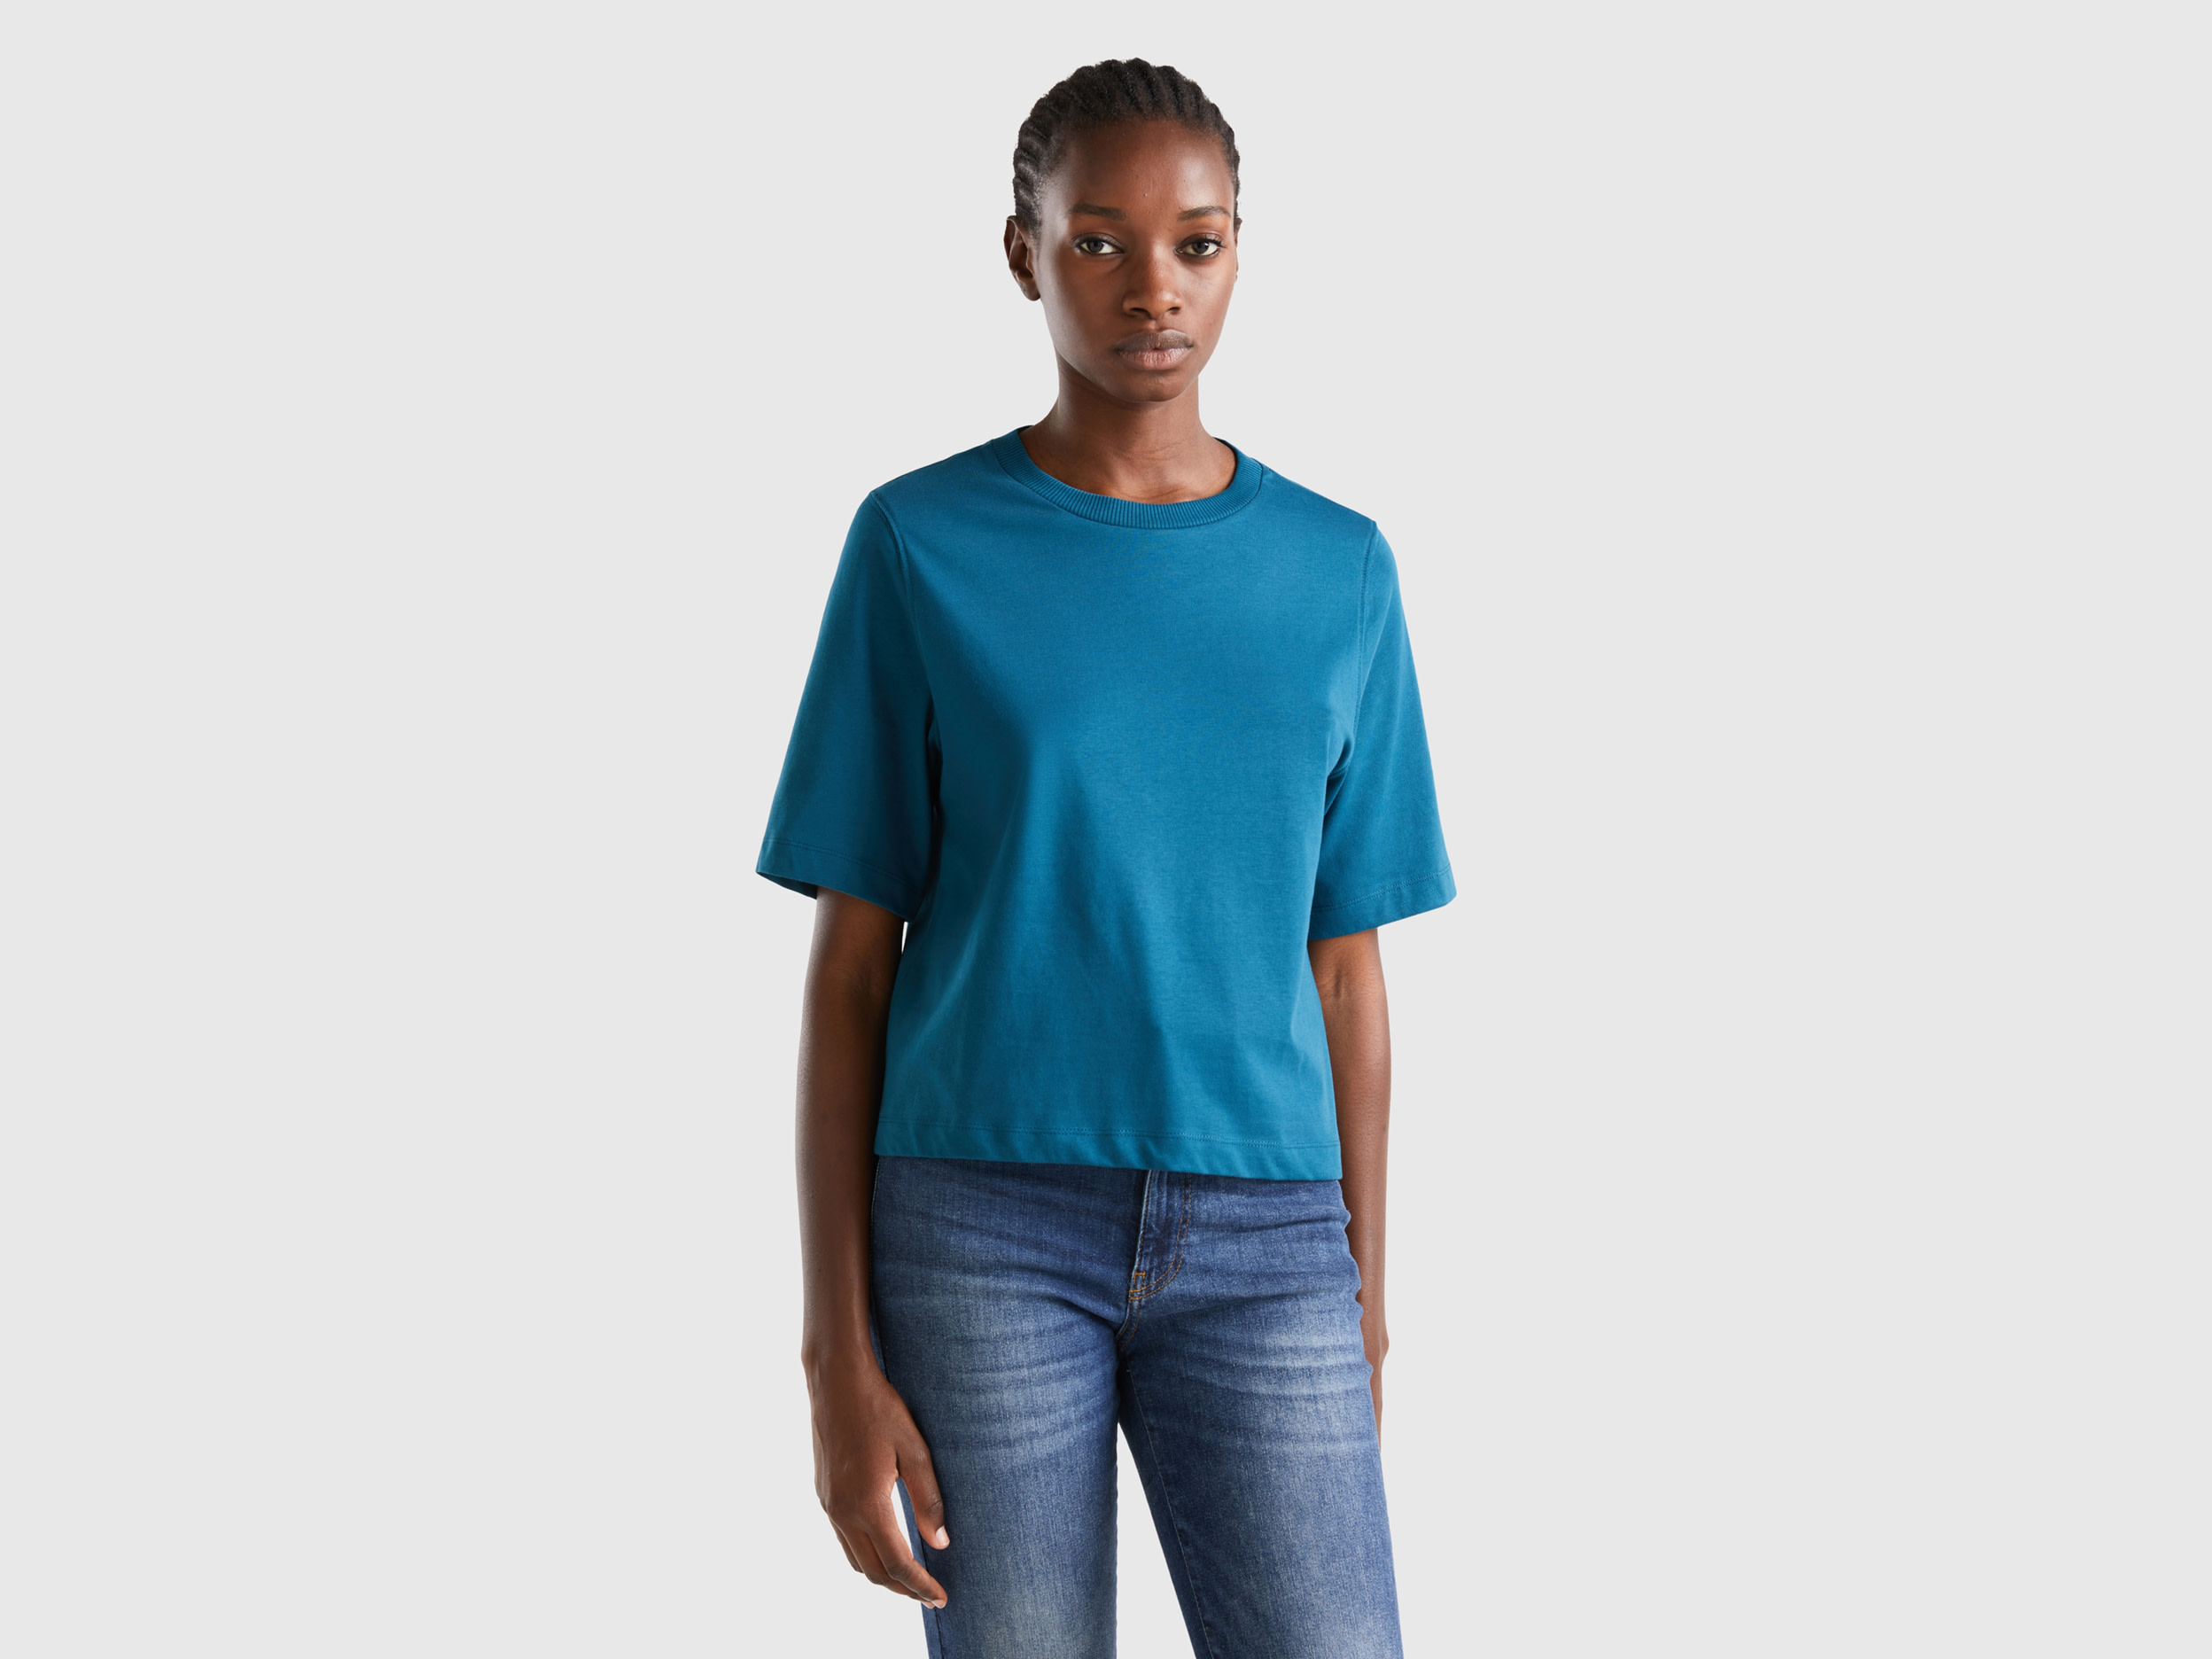 Benetton, 100% Cotton Boxy Fit T-shirt, size S, Teal, Women